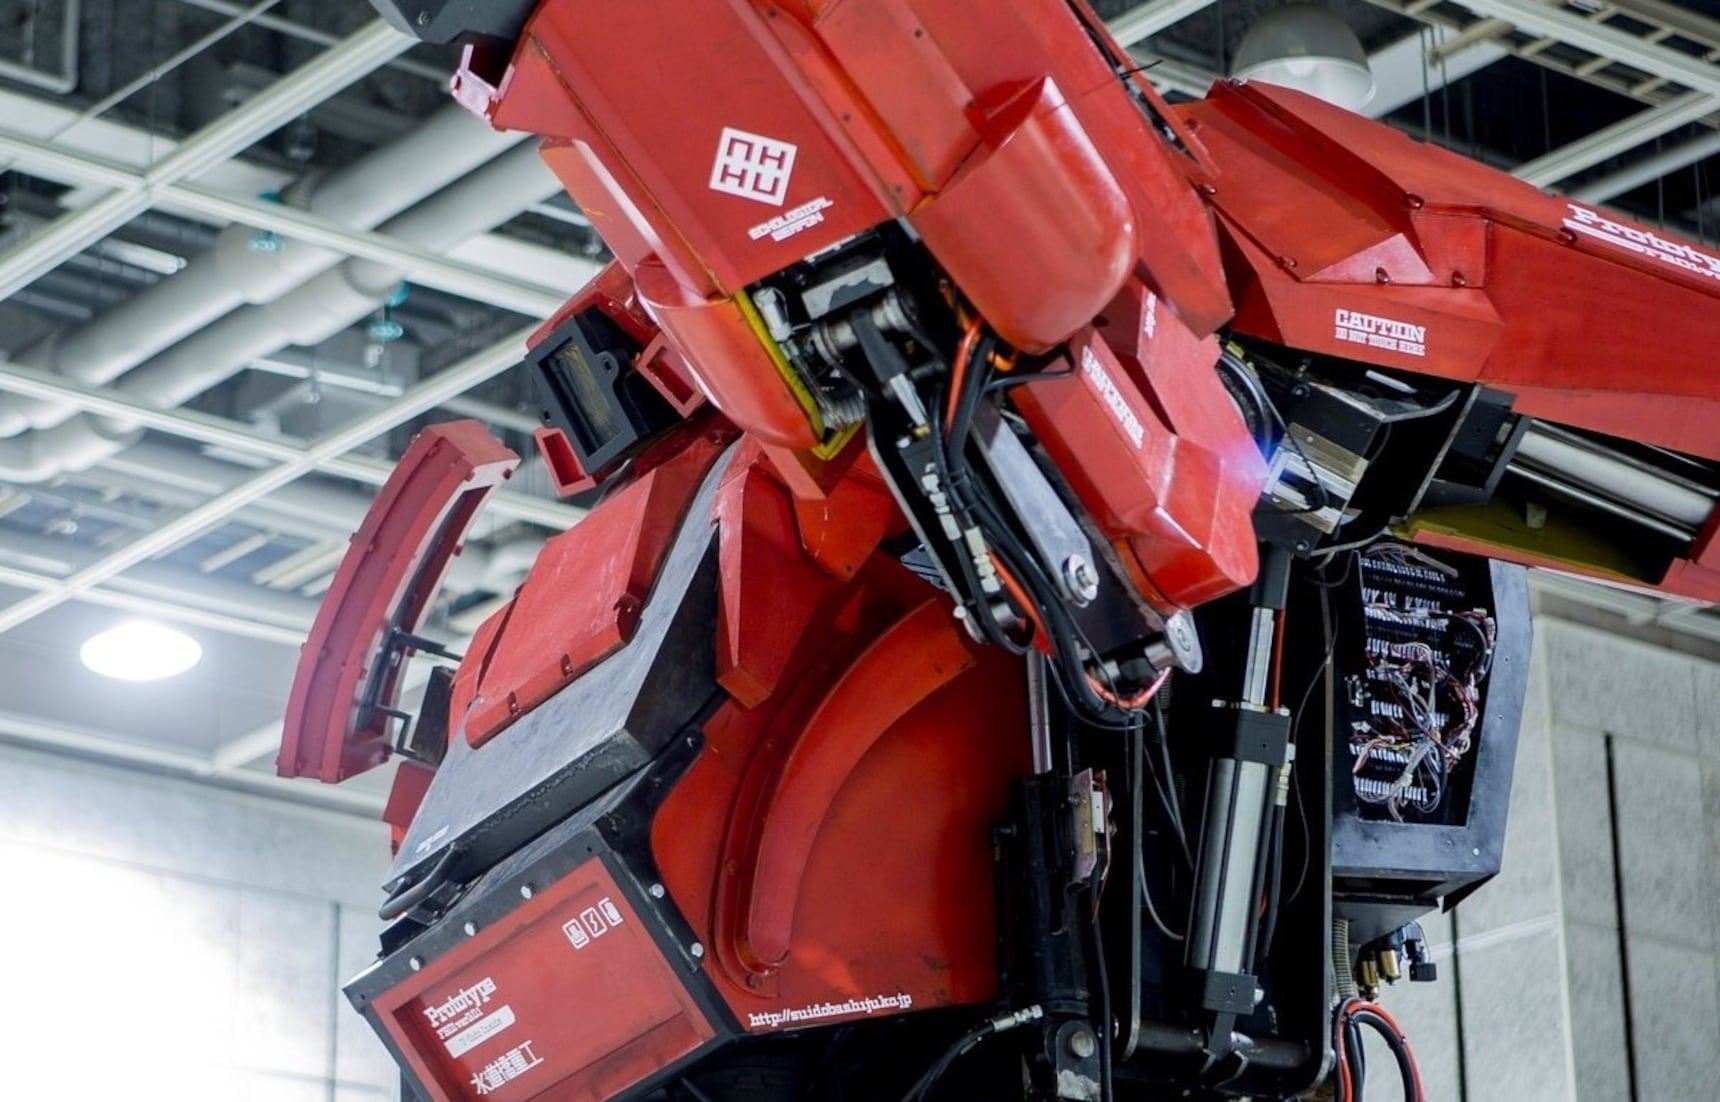 Buy a Giant Robot for ¥120 Million on Amazon!